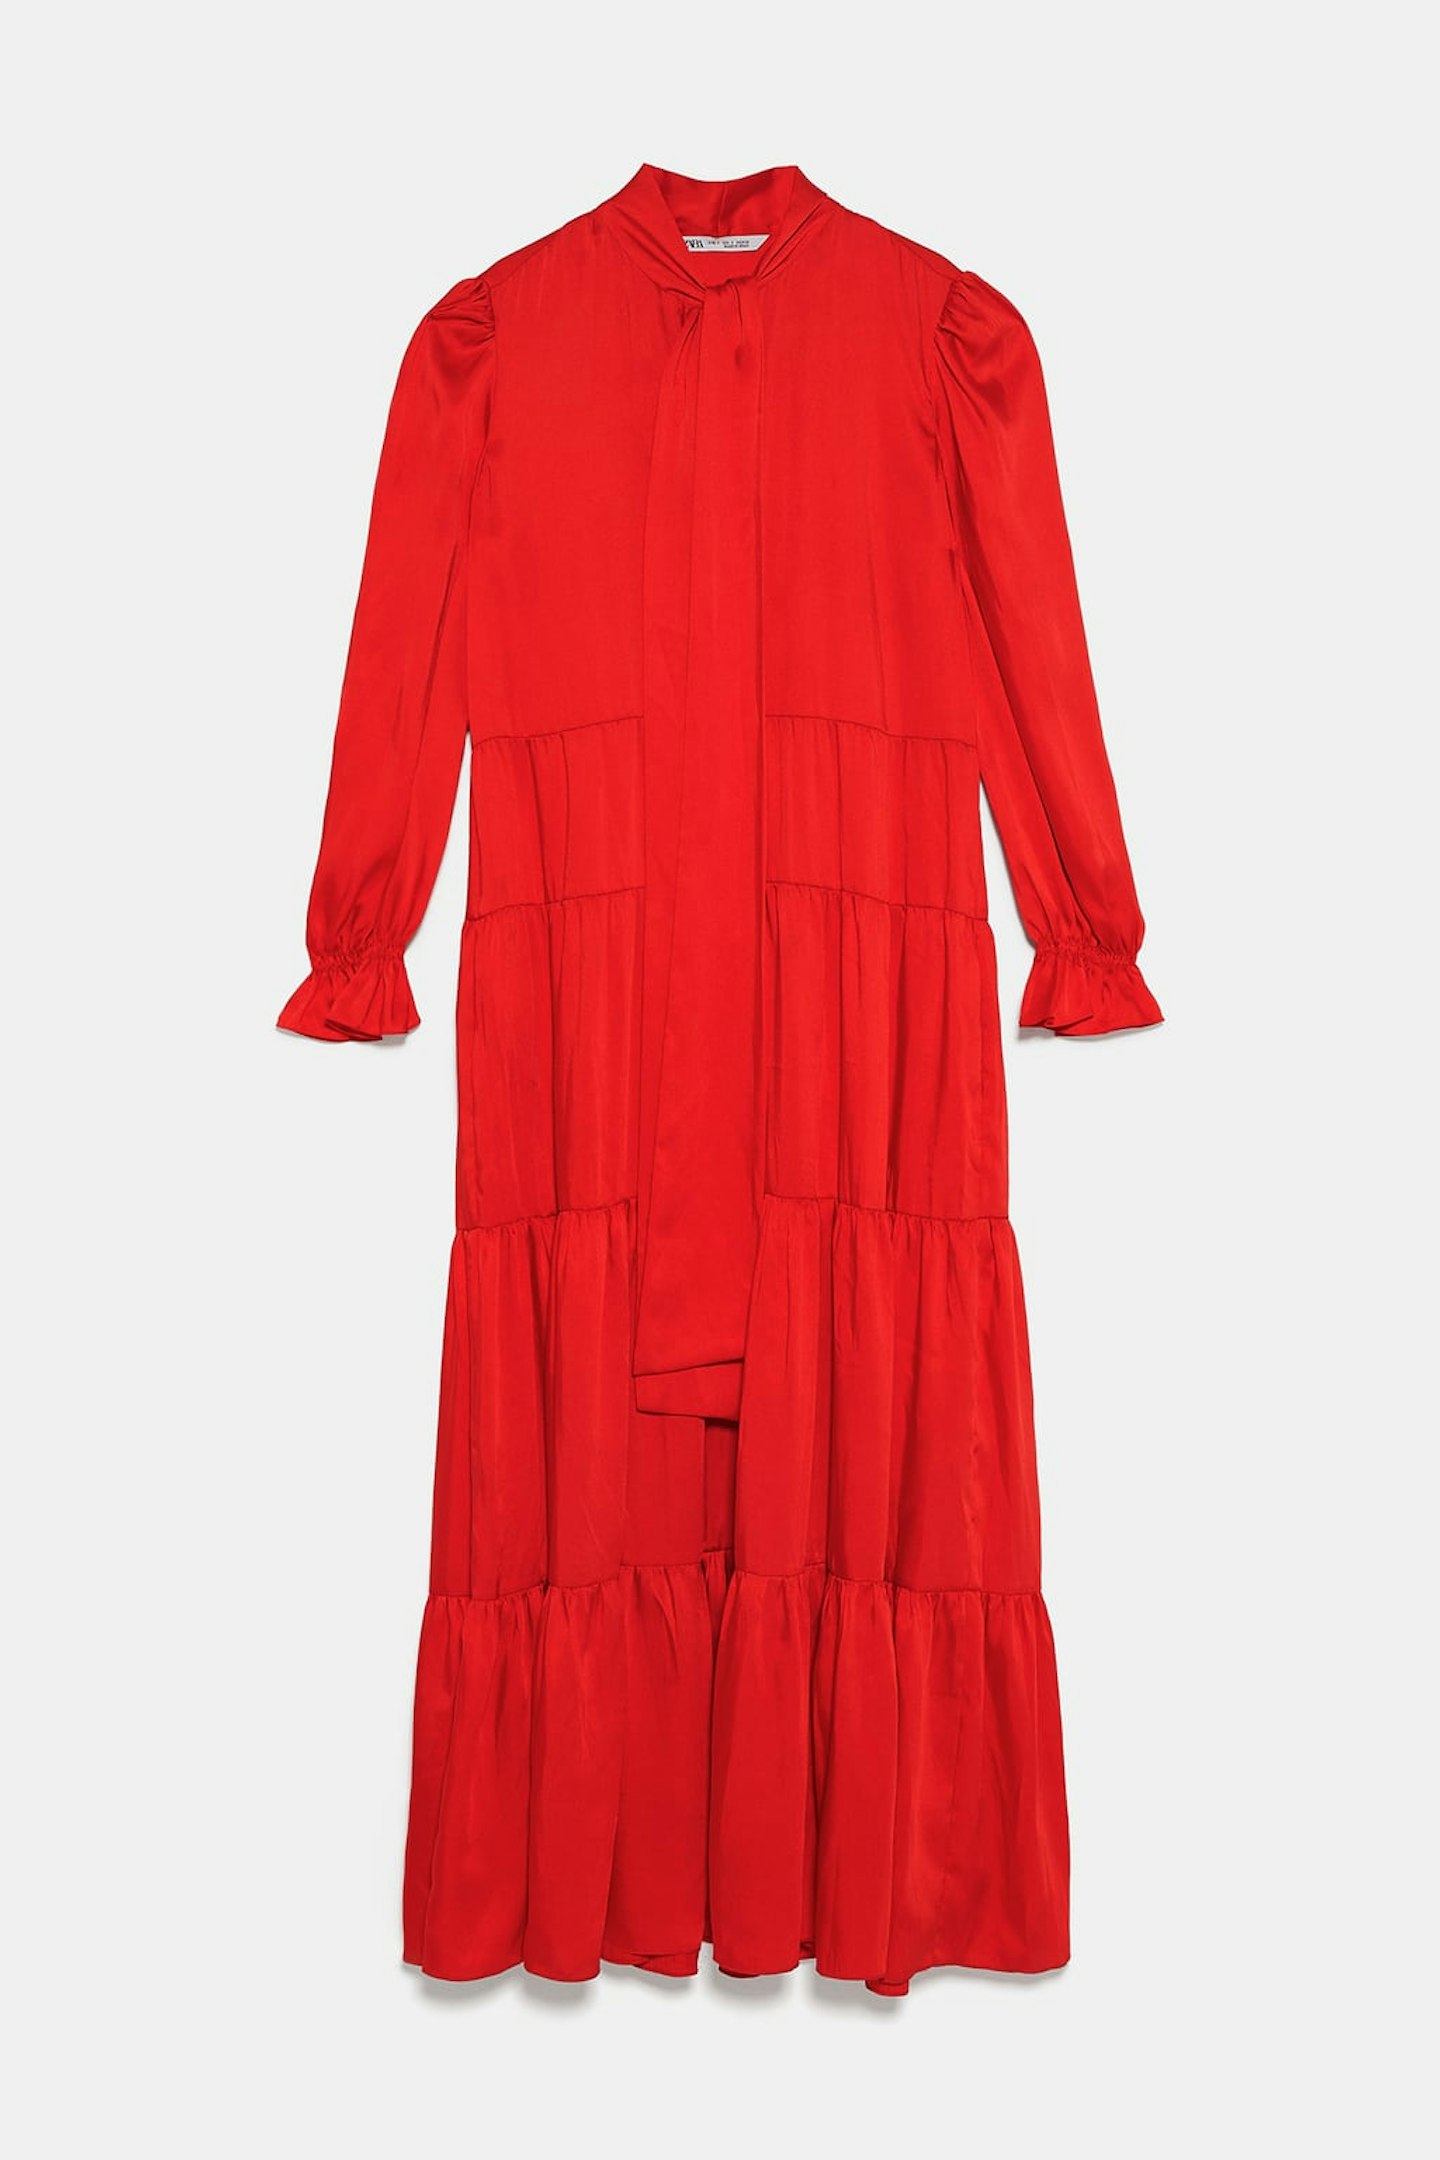 Zara, Ruffled Dress, £59.99